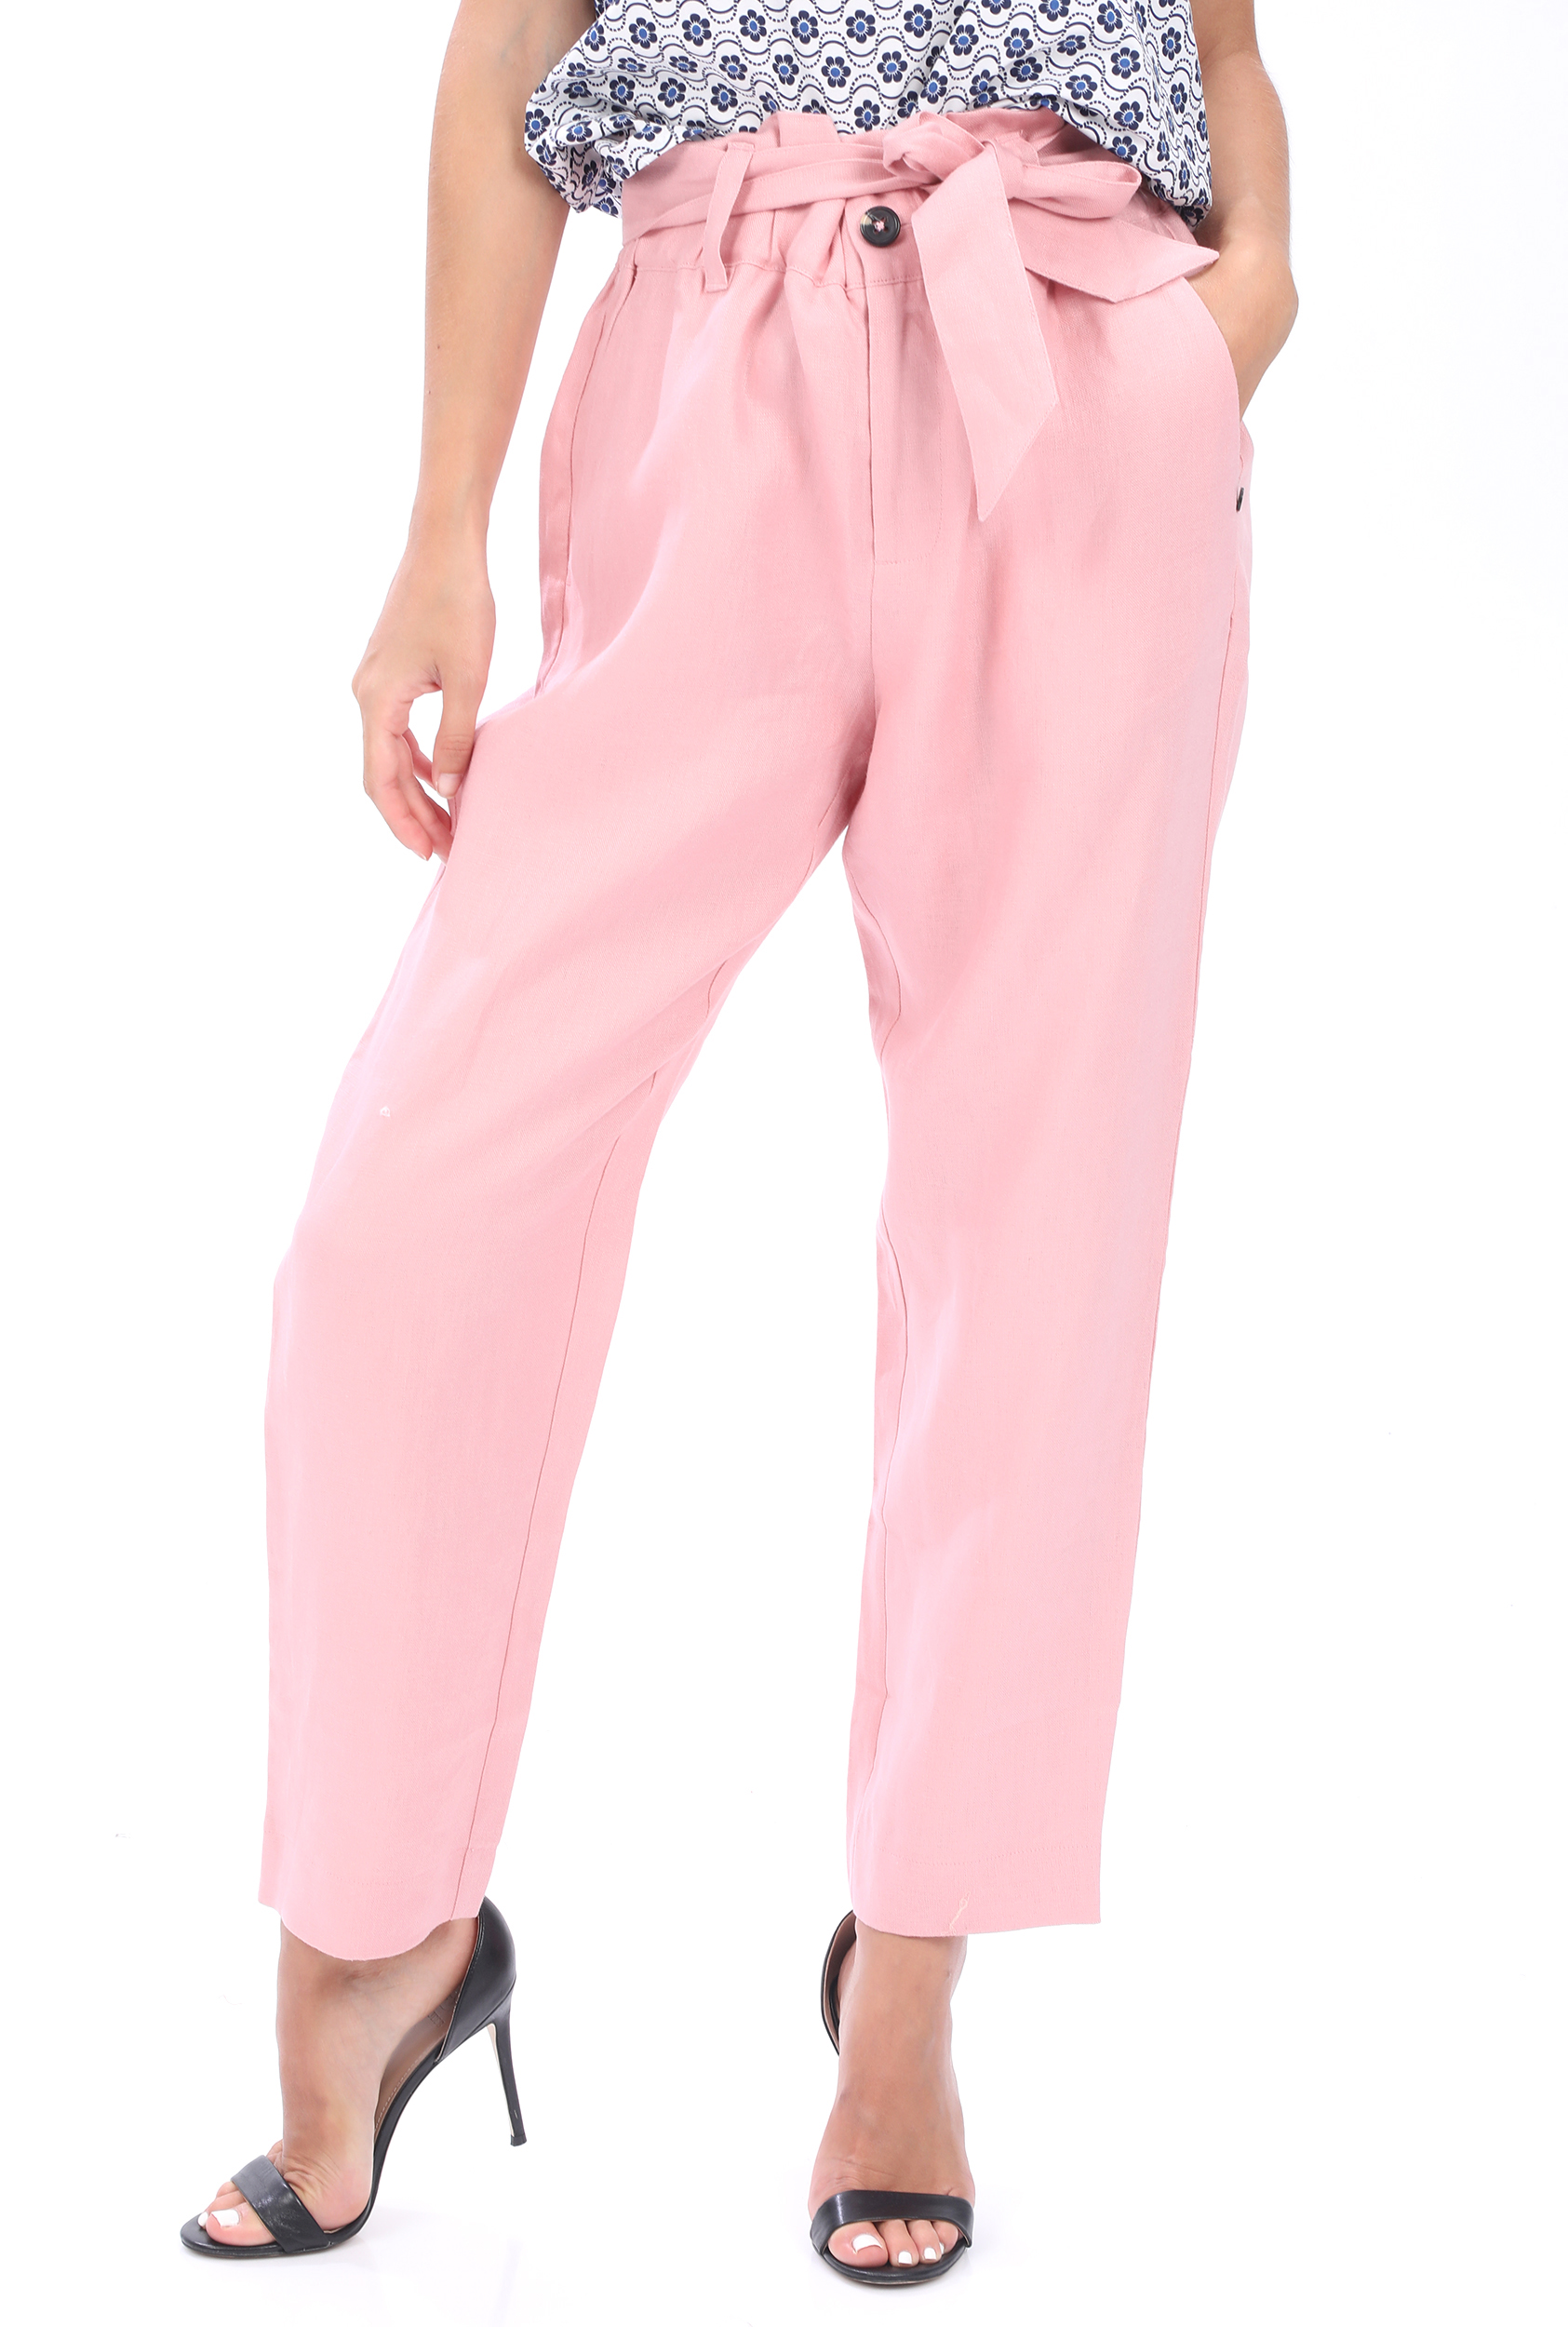 SCOTCH & SODA – Γυναικειο λινο παντελονι SCOTCH & SODA high rise pants tapered ροζ